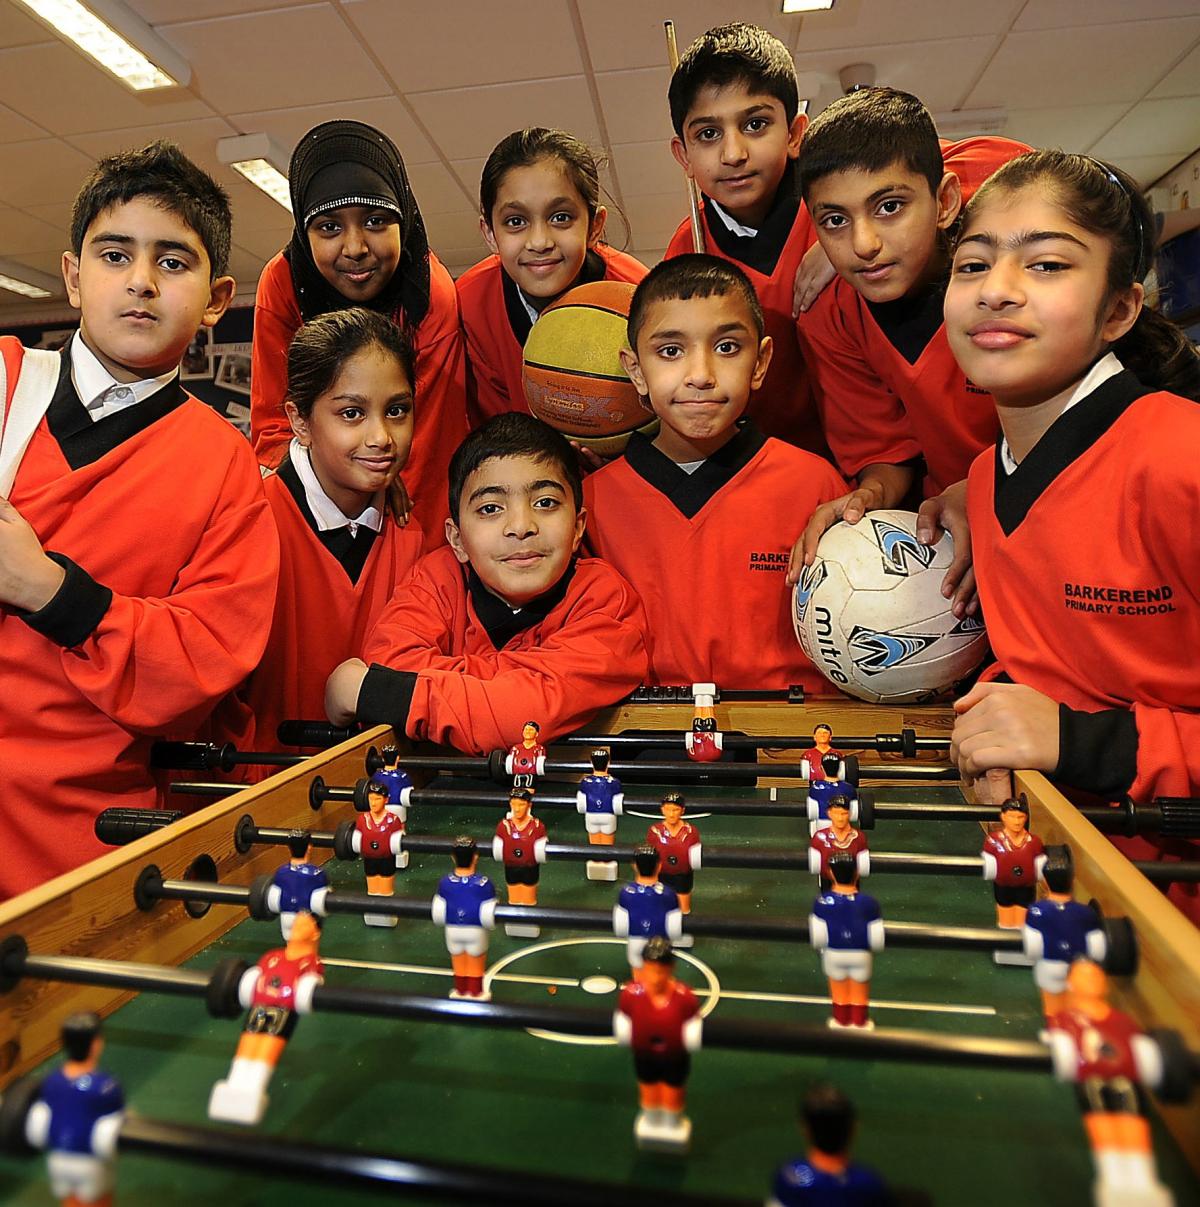 Pupils enjoy their sport at Barkerend Primary School